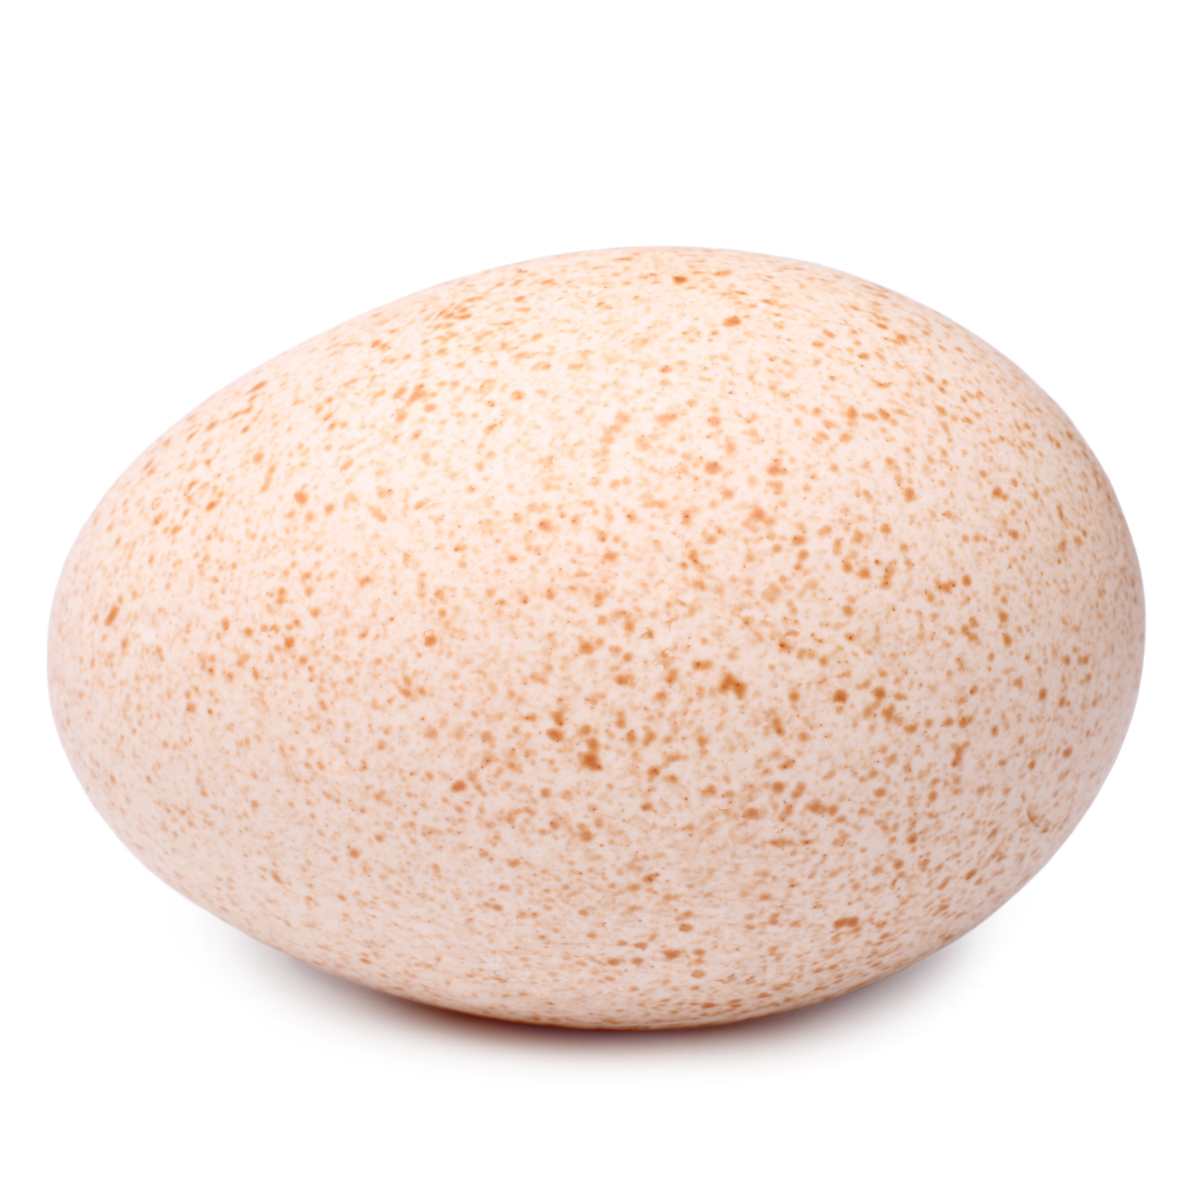 A turkey egg on a white background.